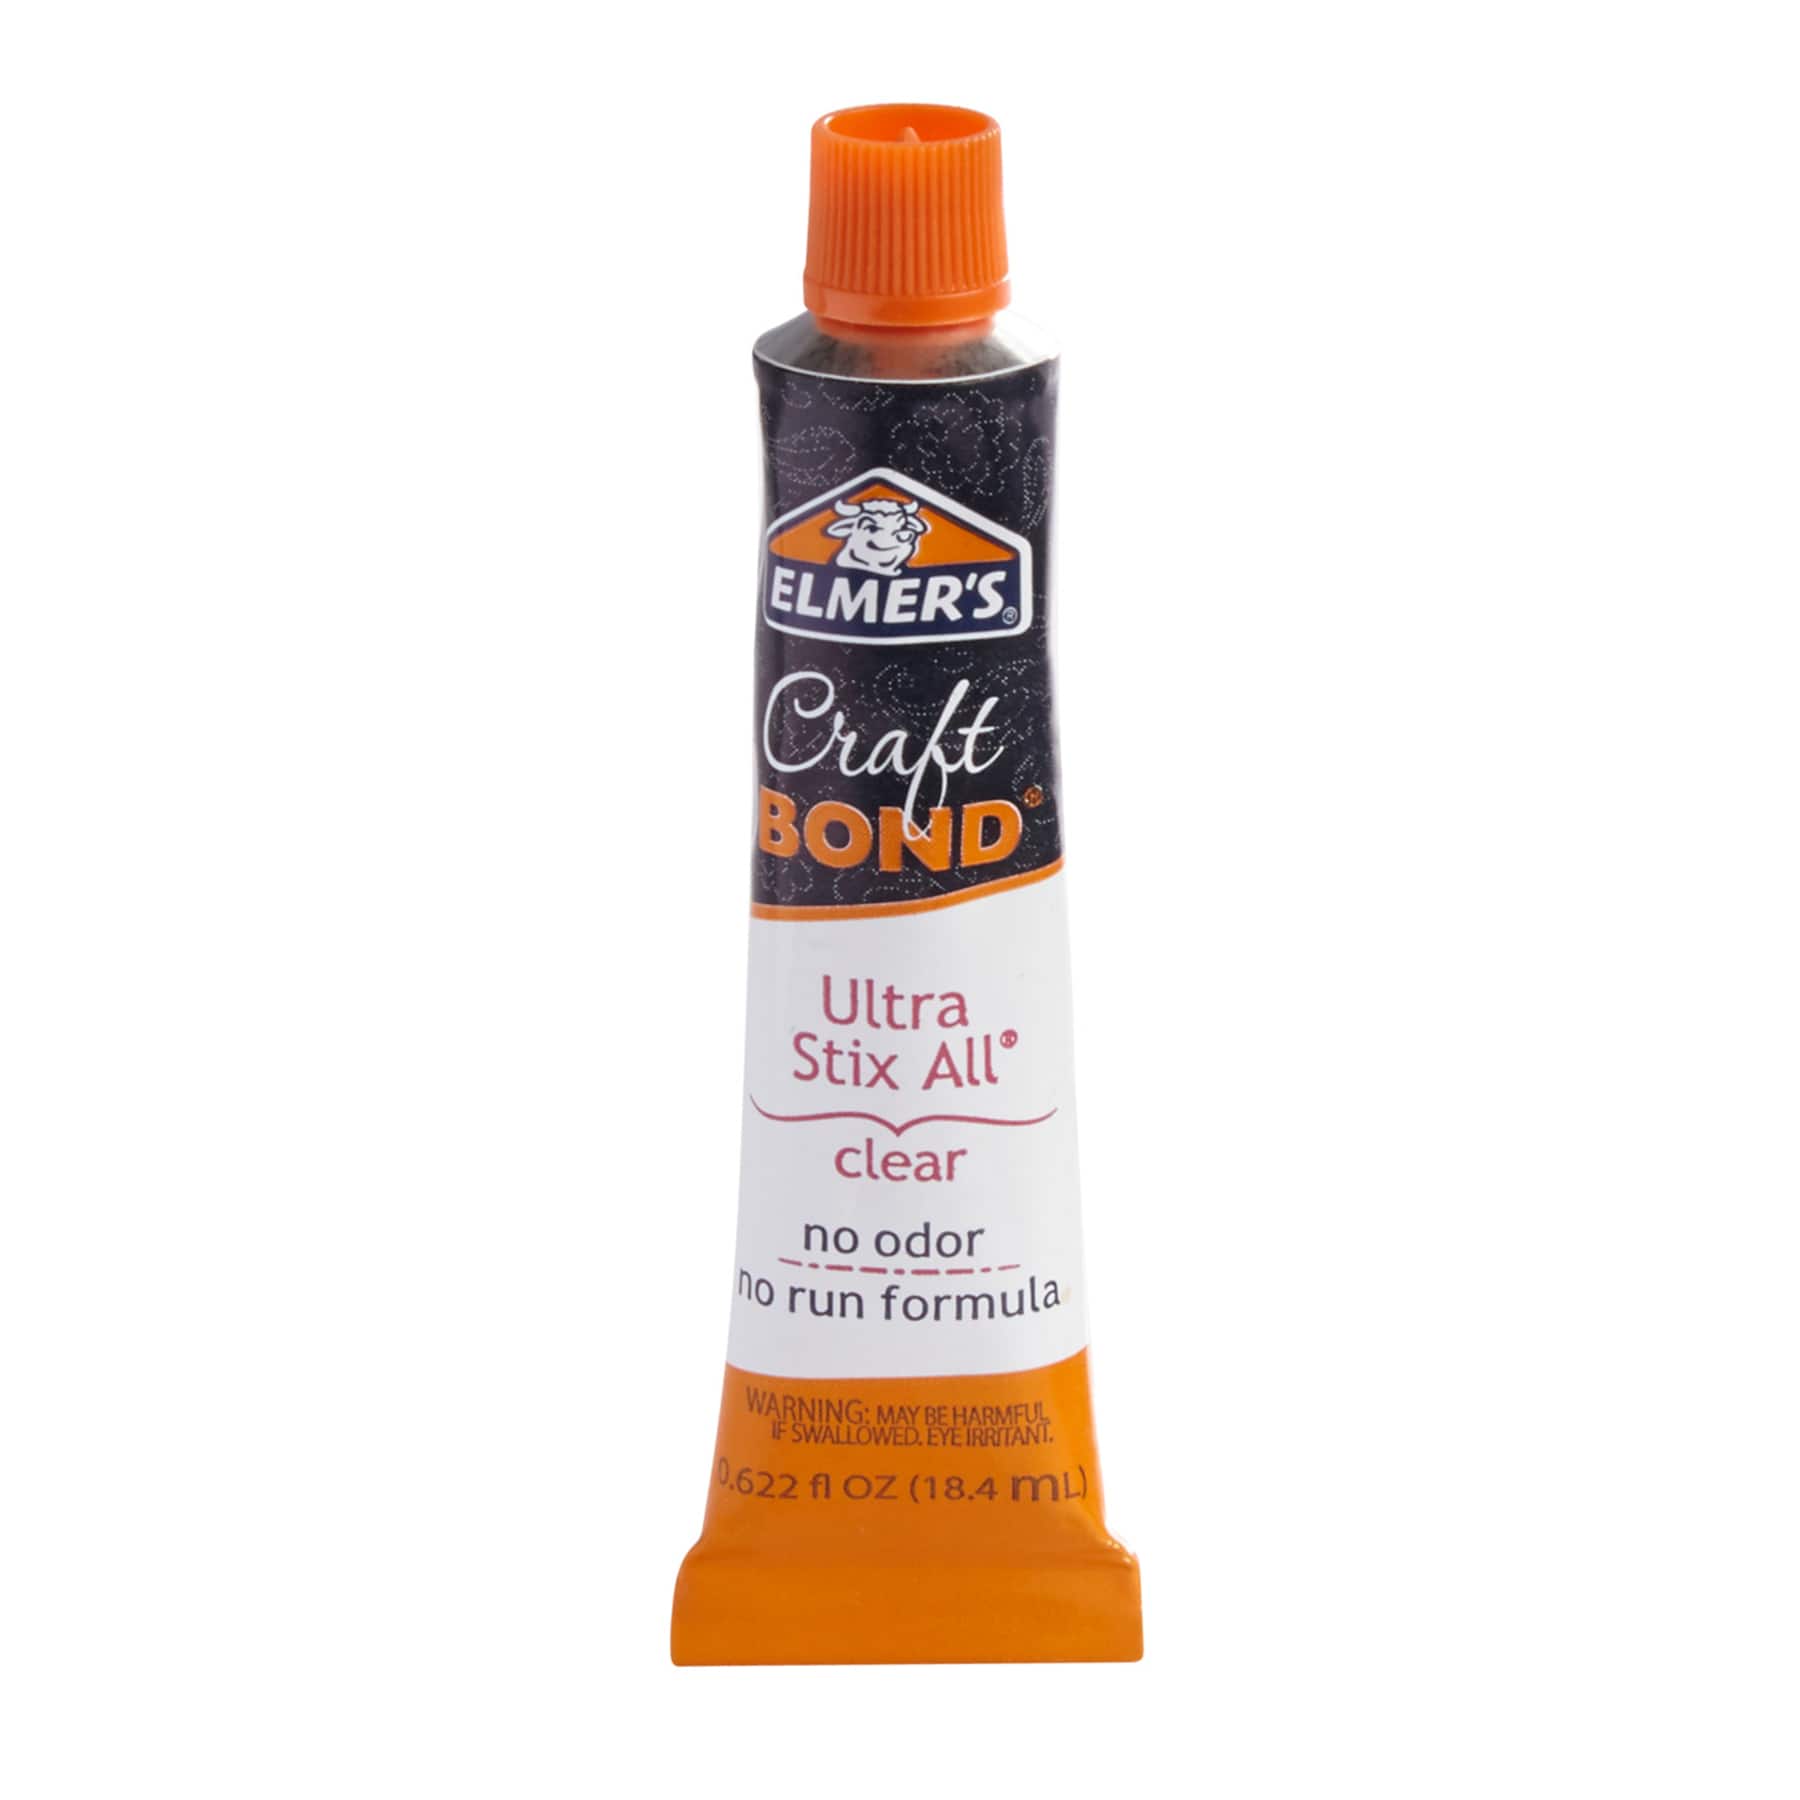 Elmer's® Ultra CraftBond® Stix All® Clear Adhesive